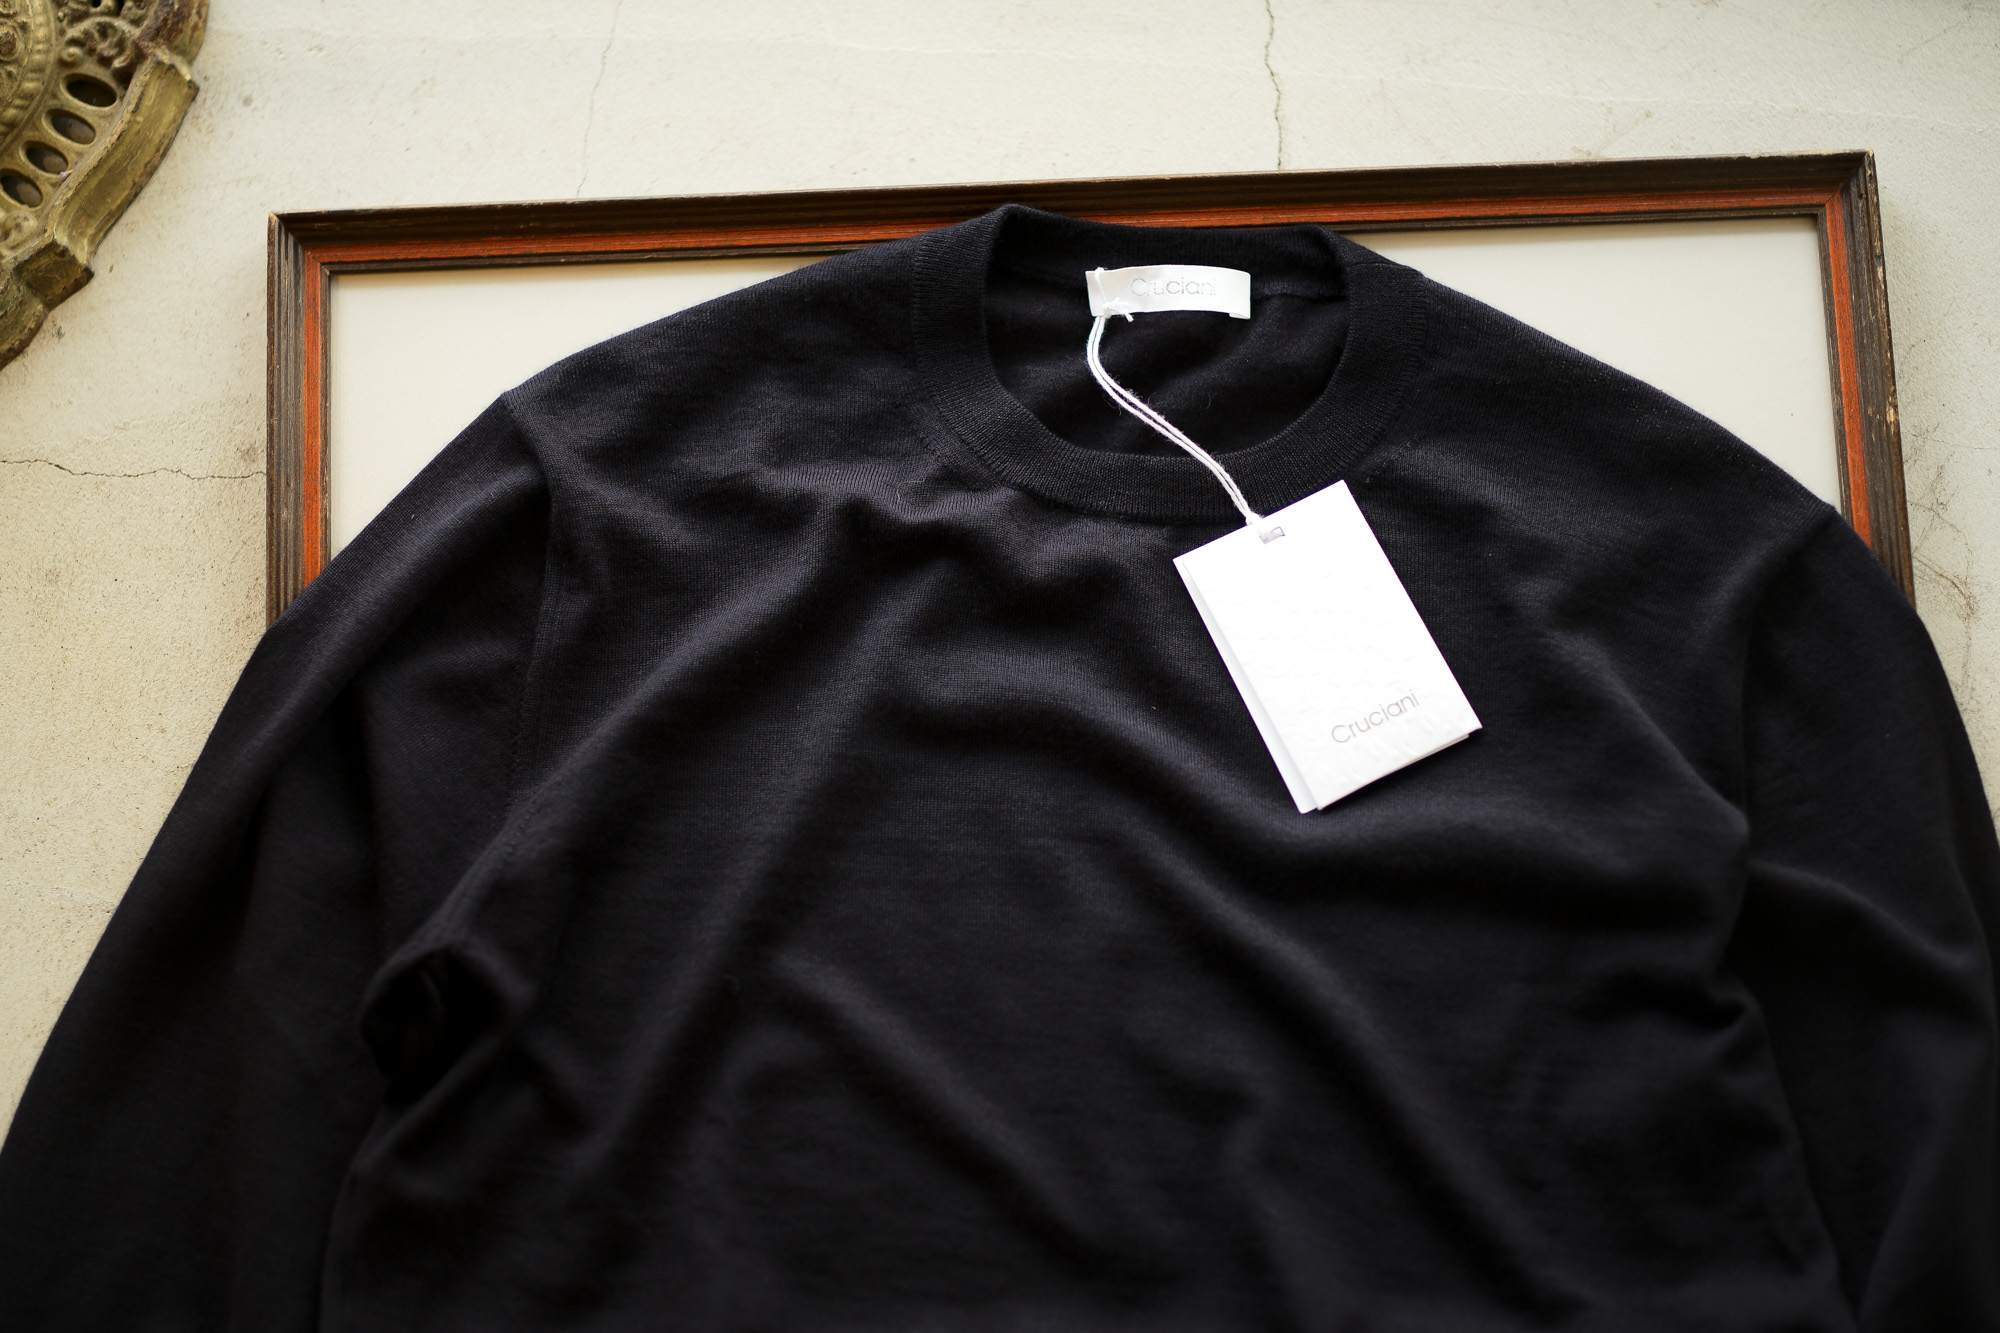 Cruciani (クルチアーニ) Silk Cashmere Crew Neck Sweater (シルクカシミヤ クルーネック セーター